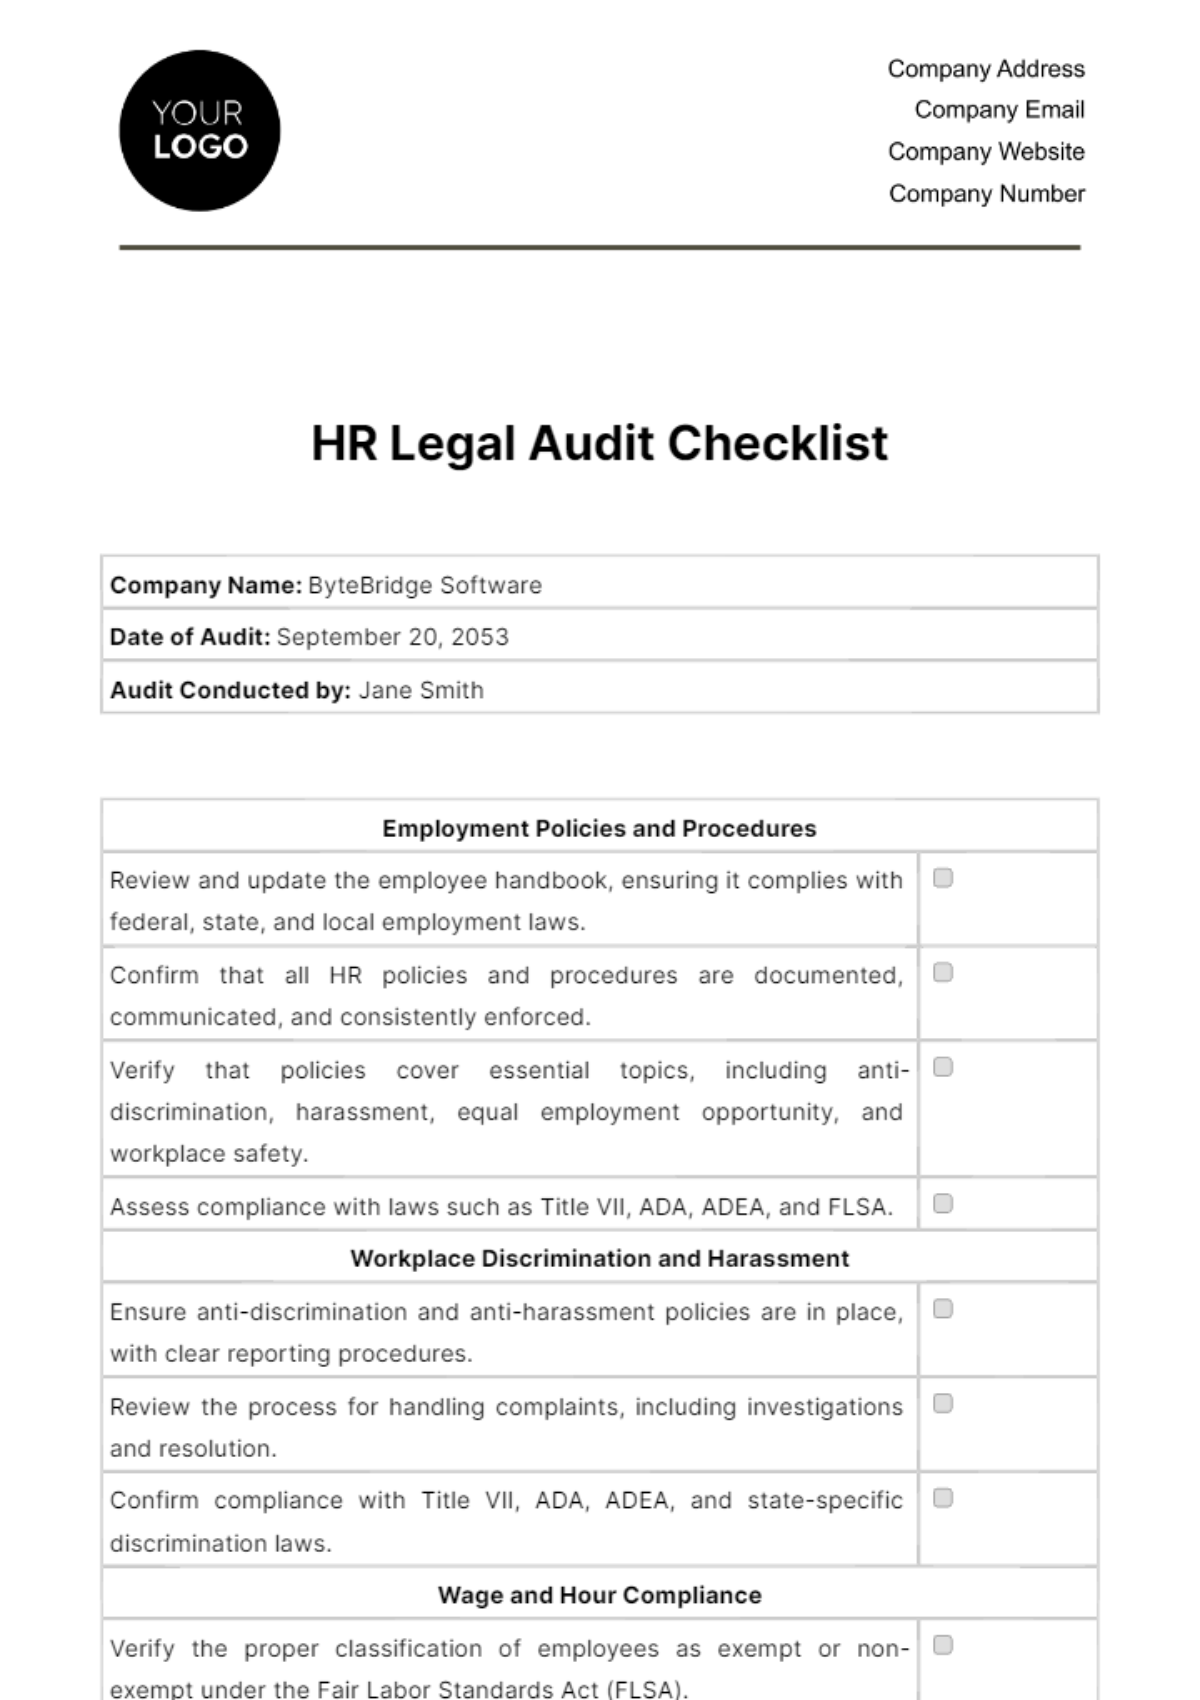 HR Legal Audit Checklist Template